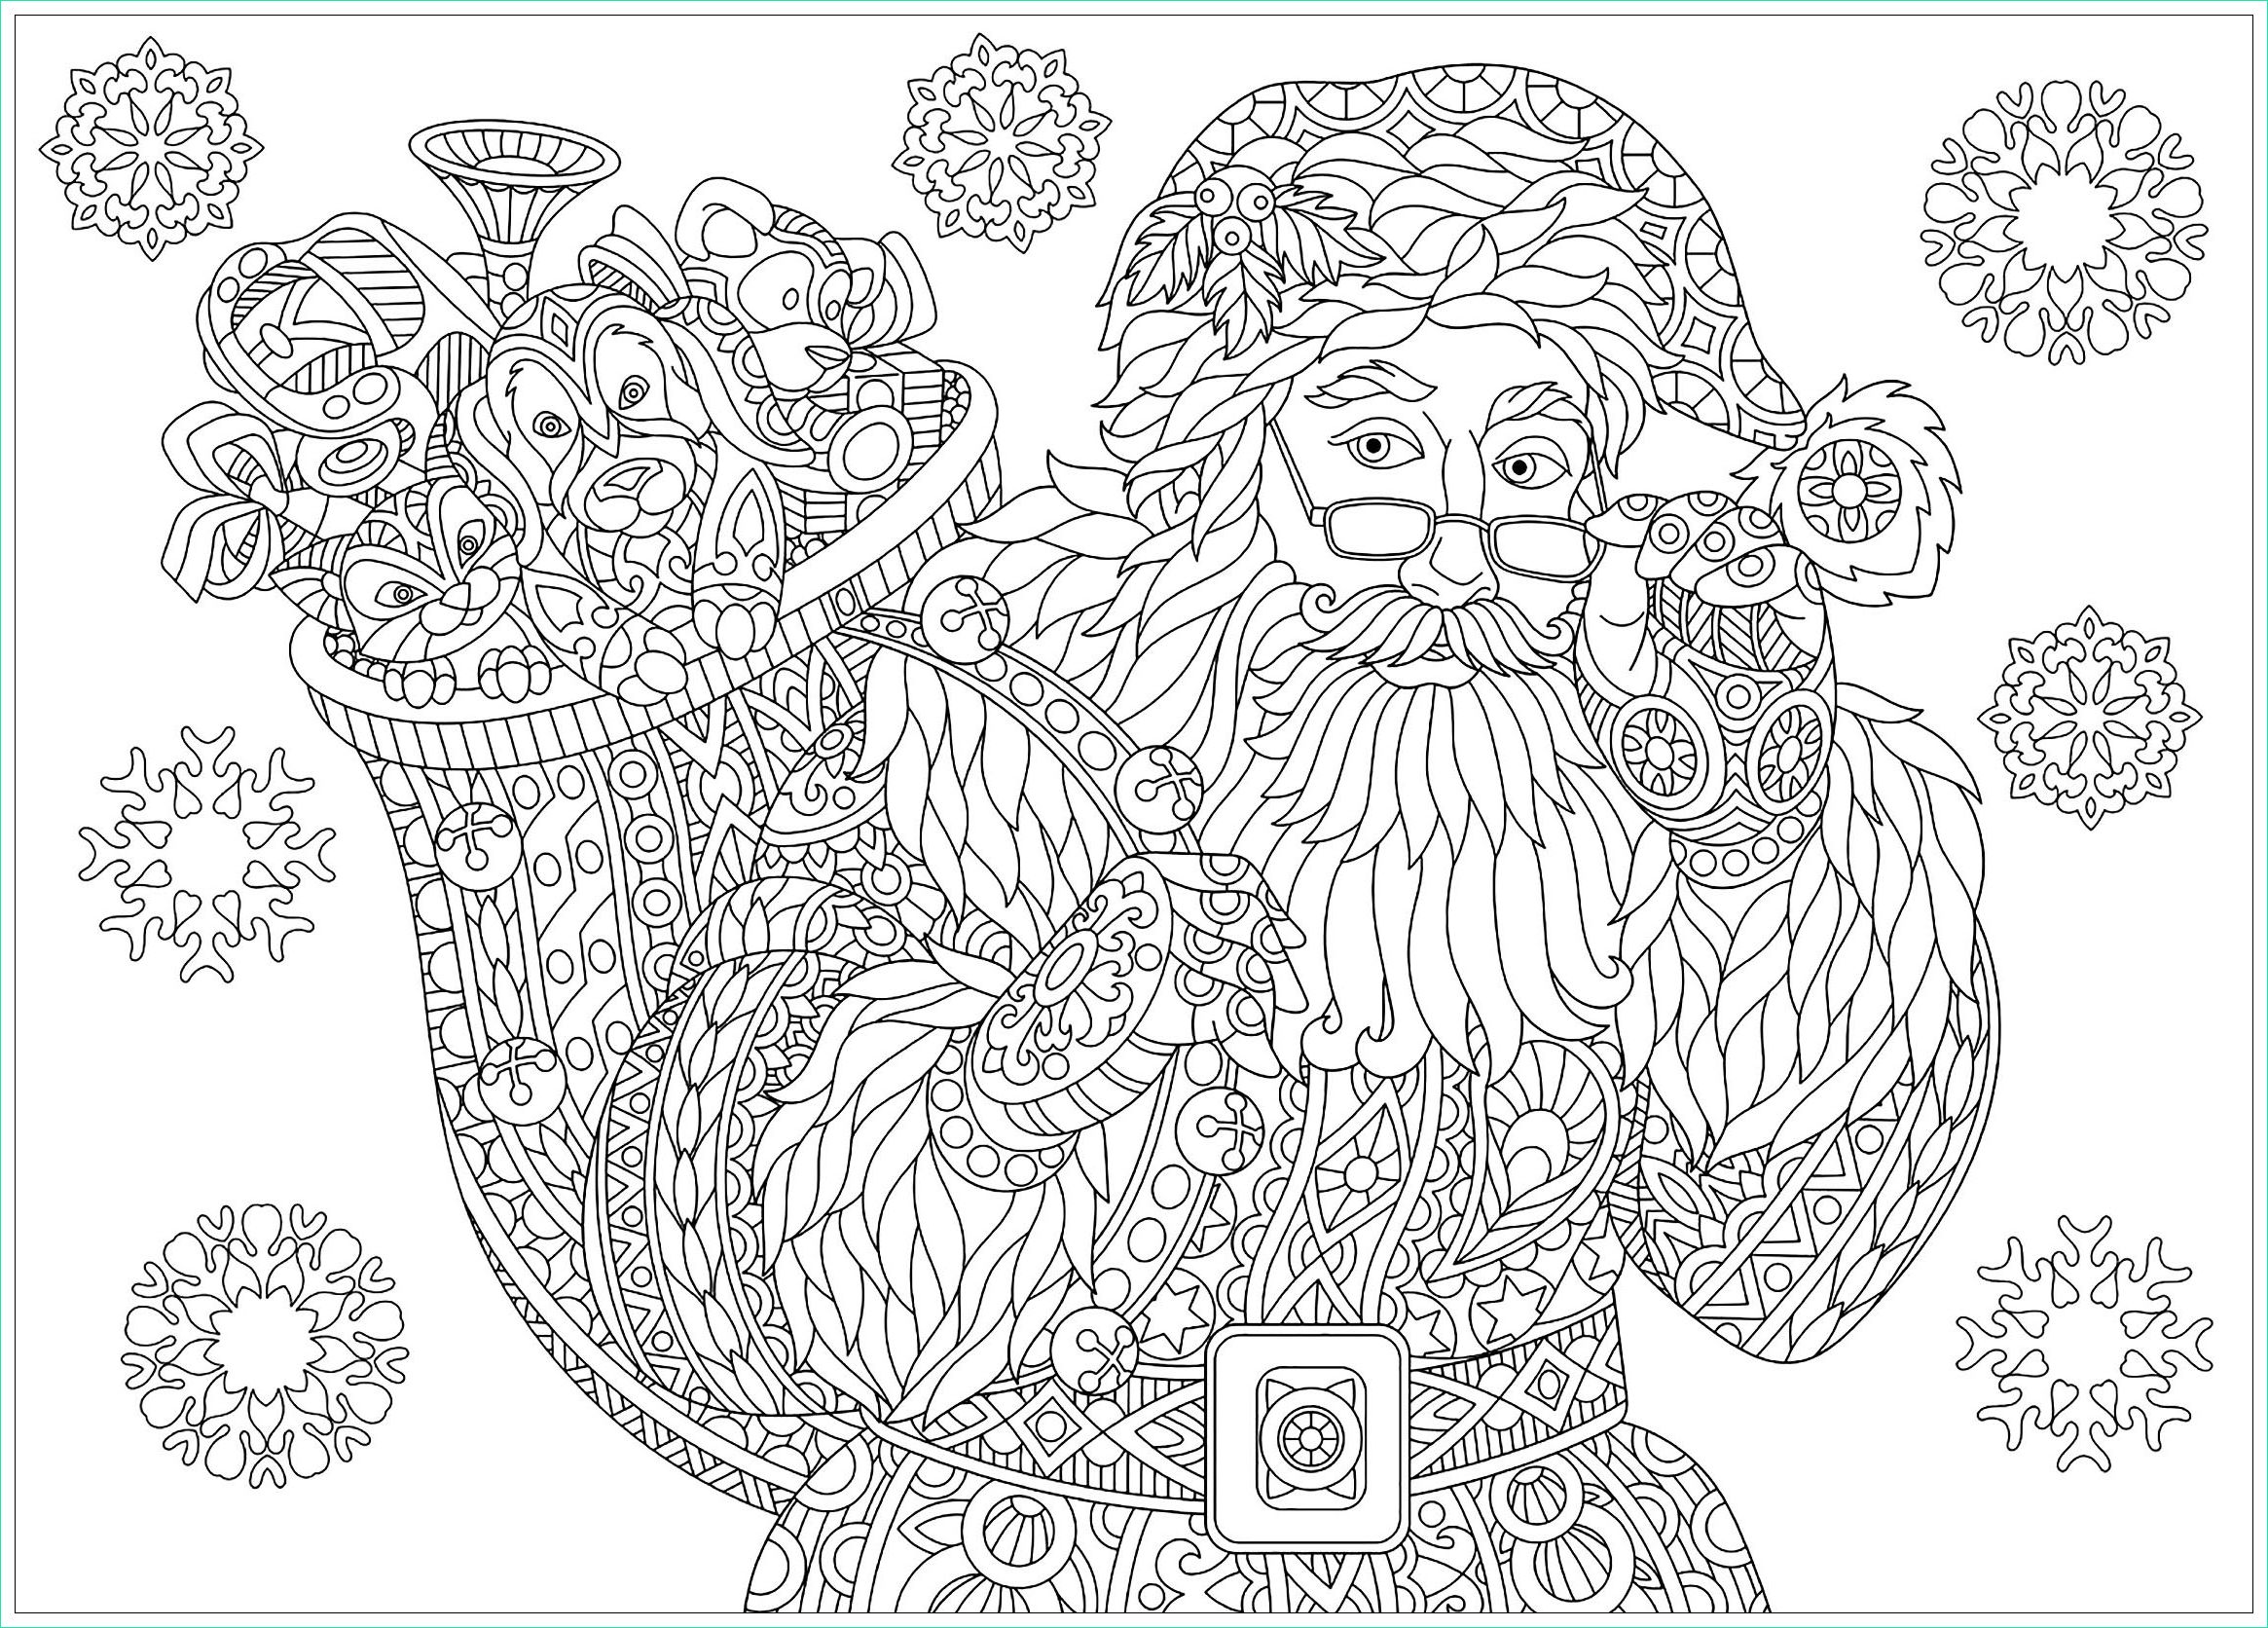 Dessin A Imprimer De Noel Cool Image 10 Coloriage Adulte De Noel